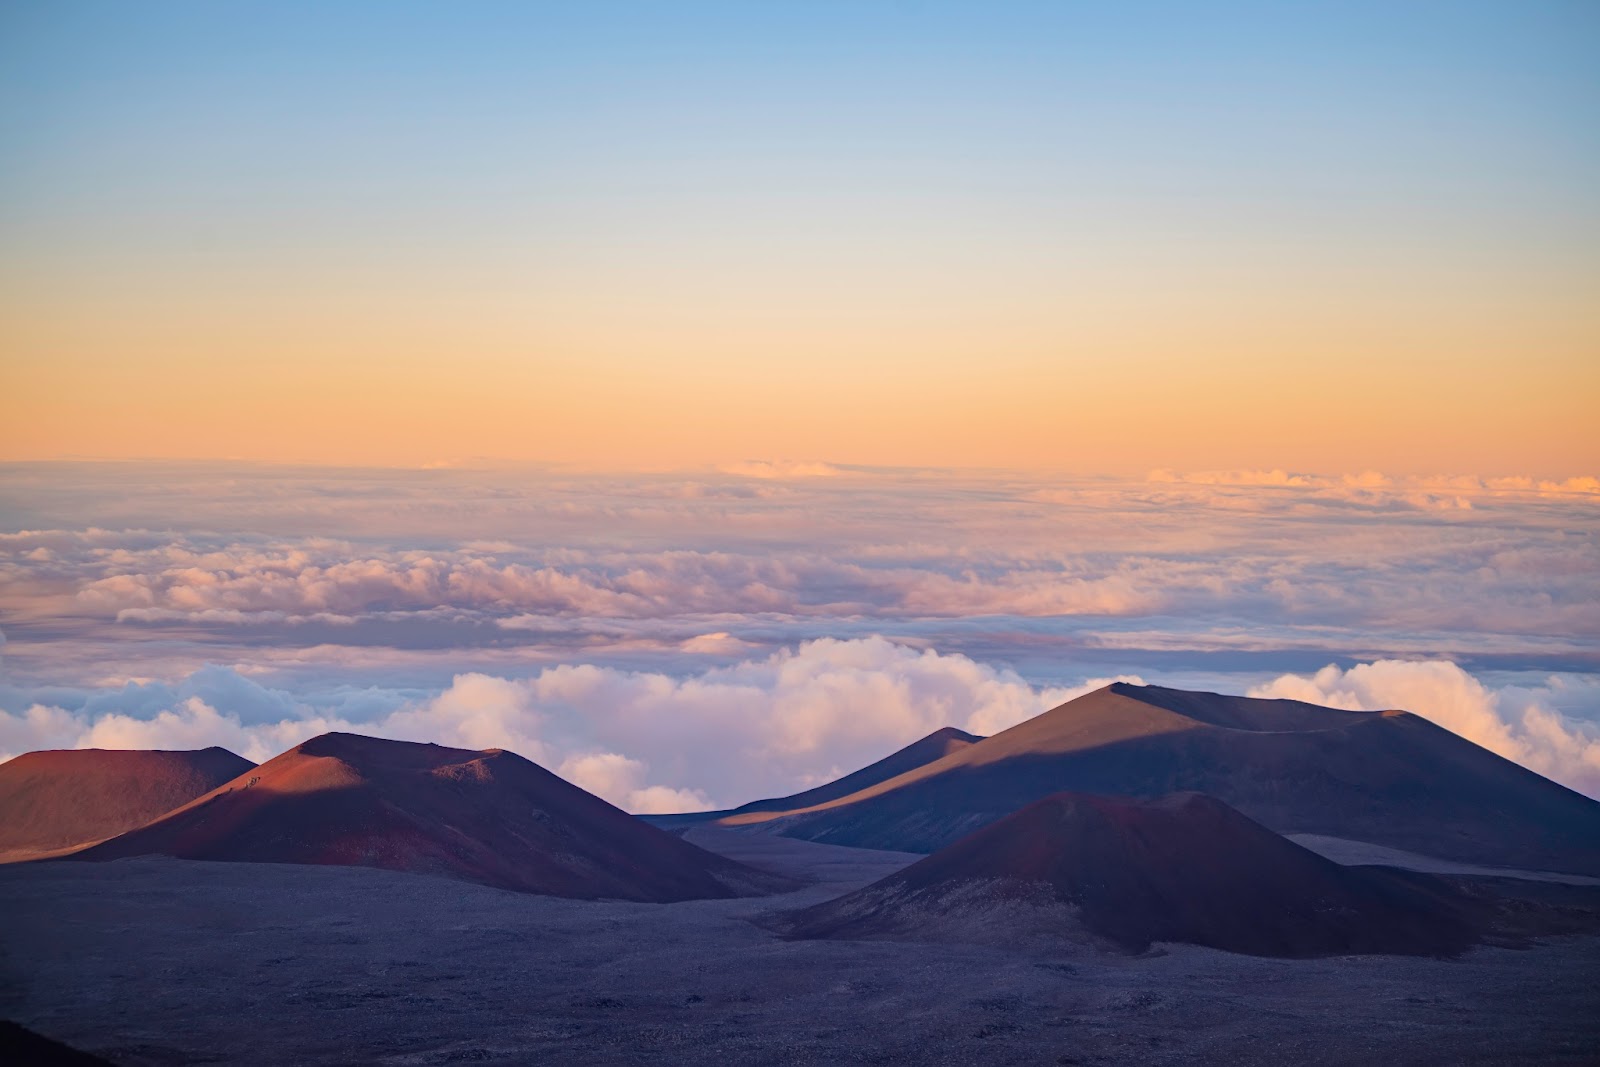 Mauna Kea summit with sunrise views over Hawaii.